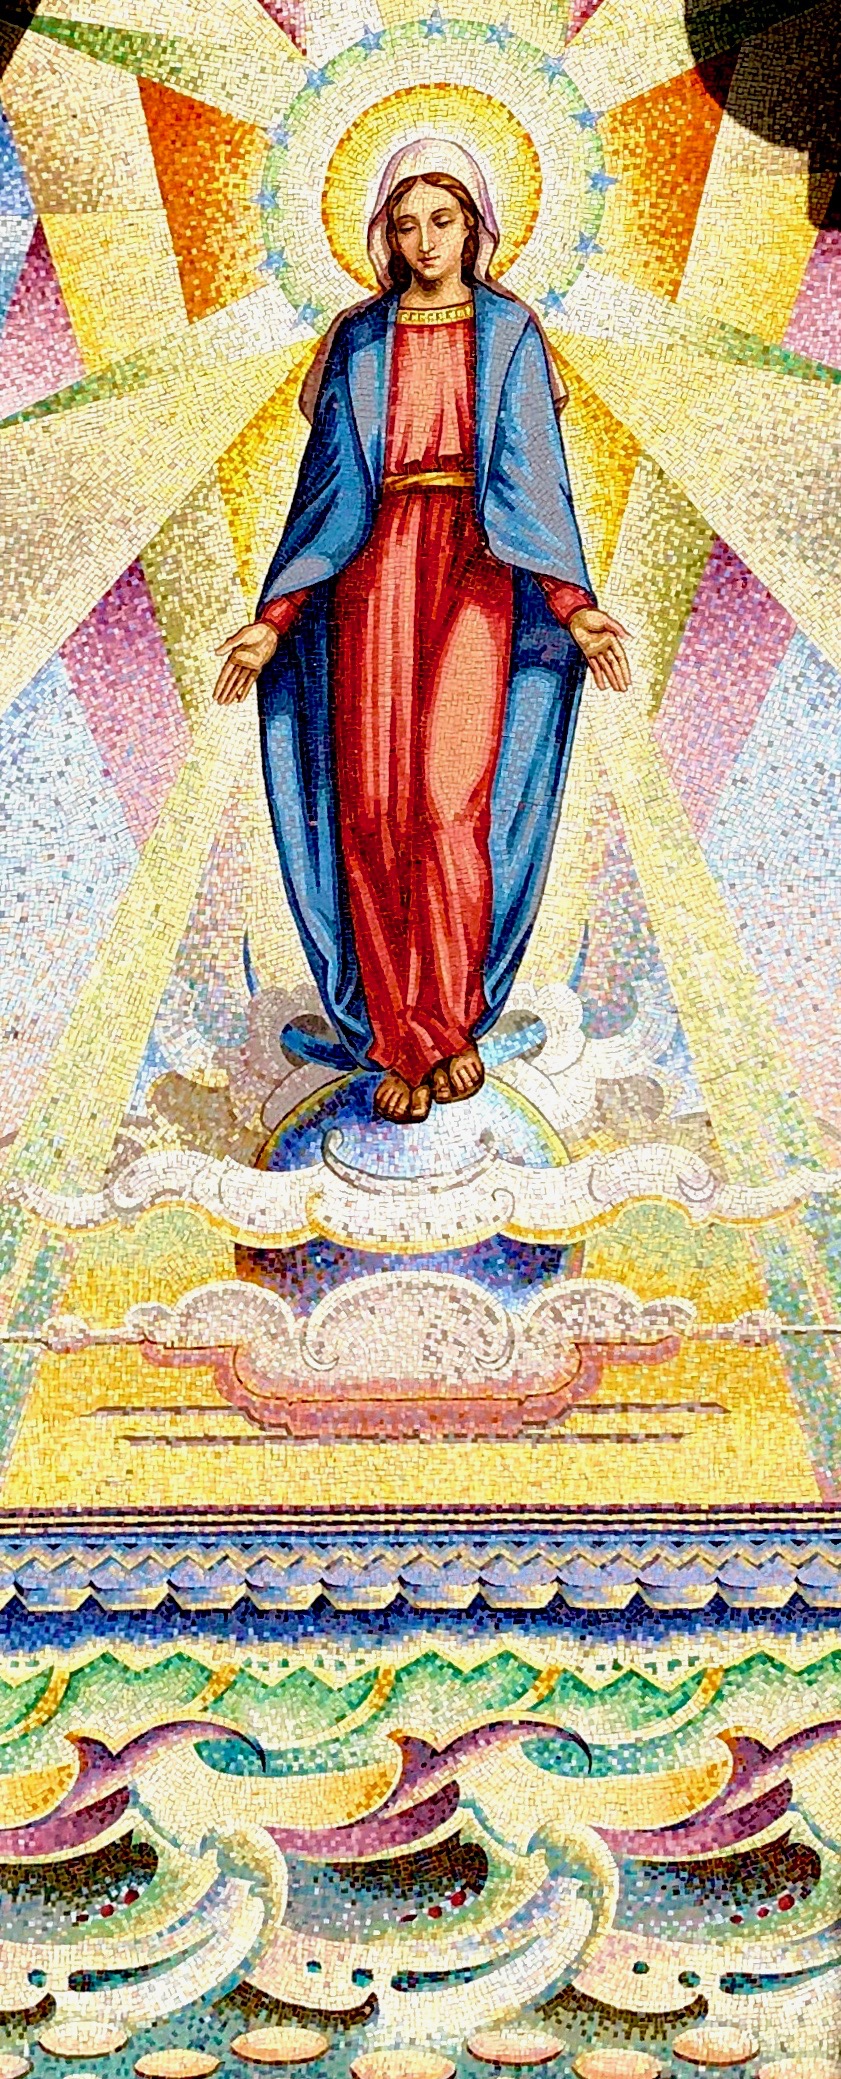 Mosaic Design, Our Lady of Refuge Catholic Church, Castroville, California, Lanzini.jpeg